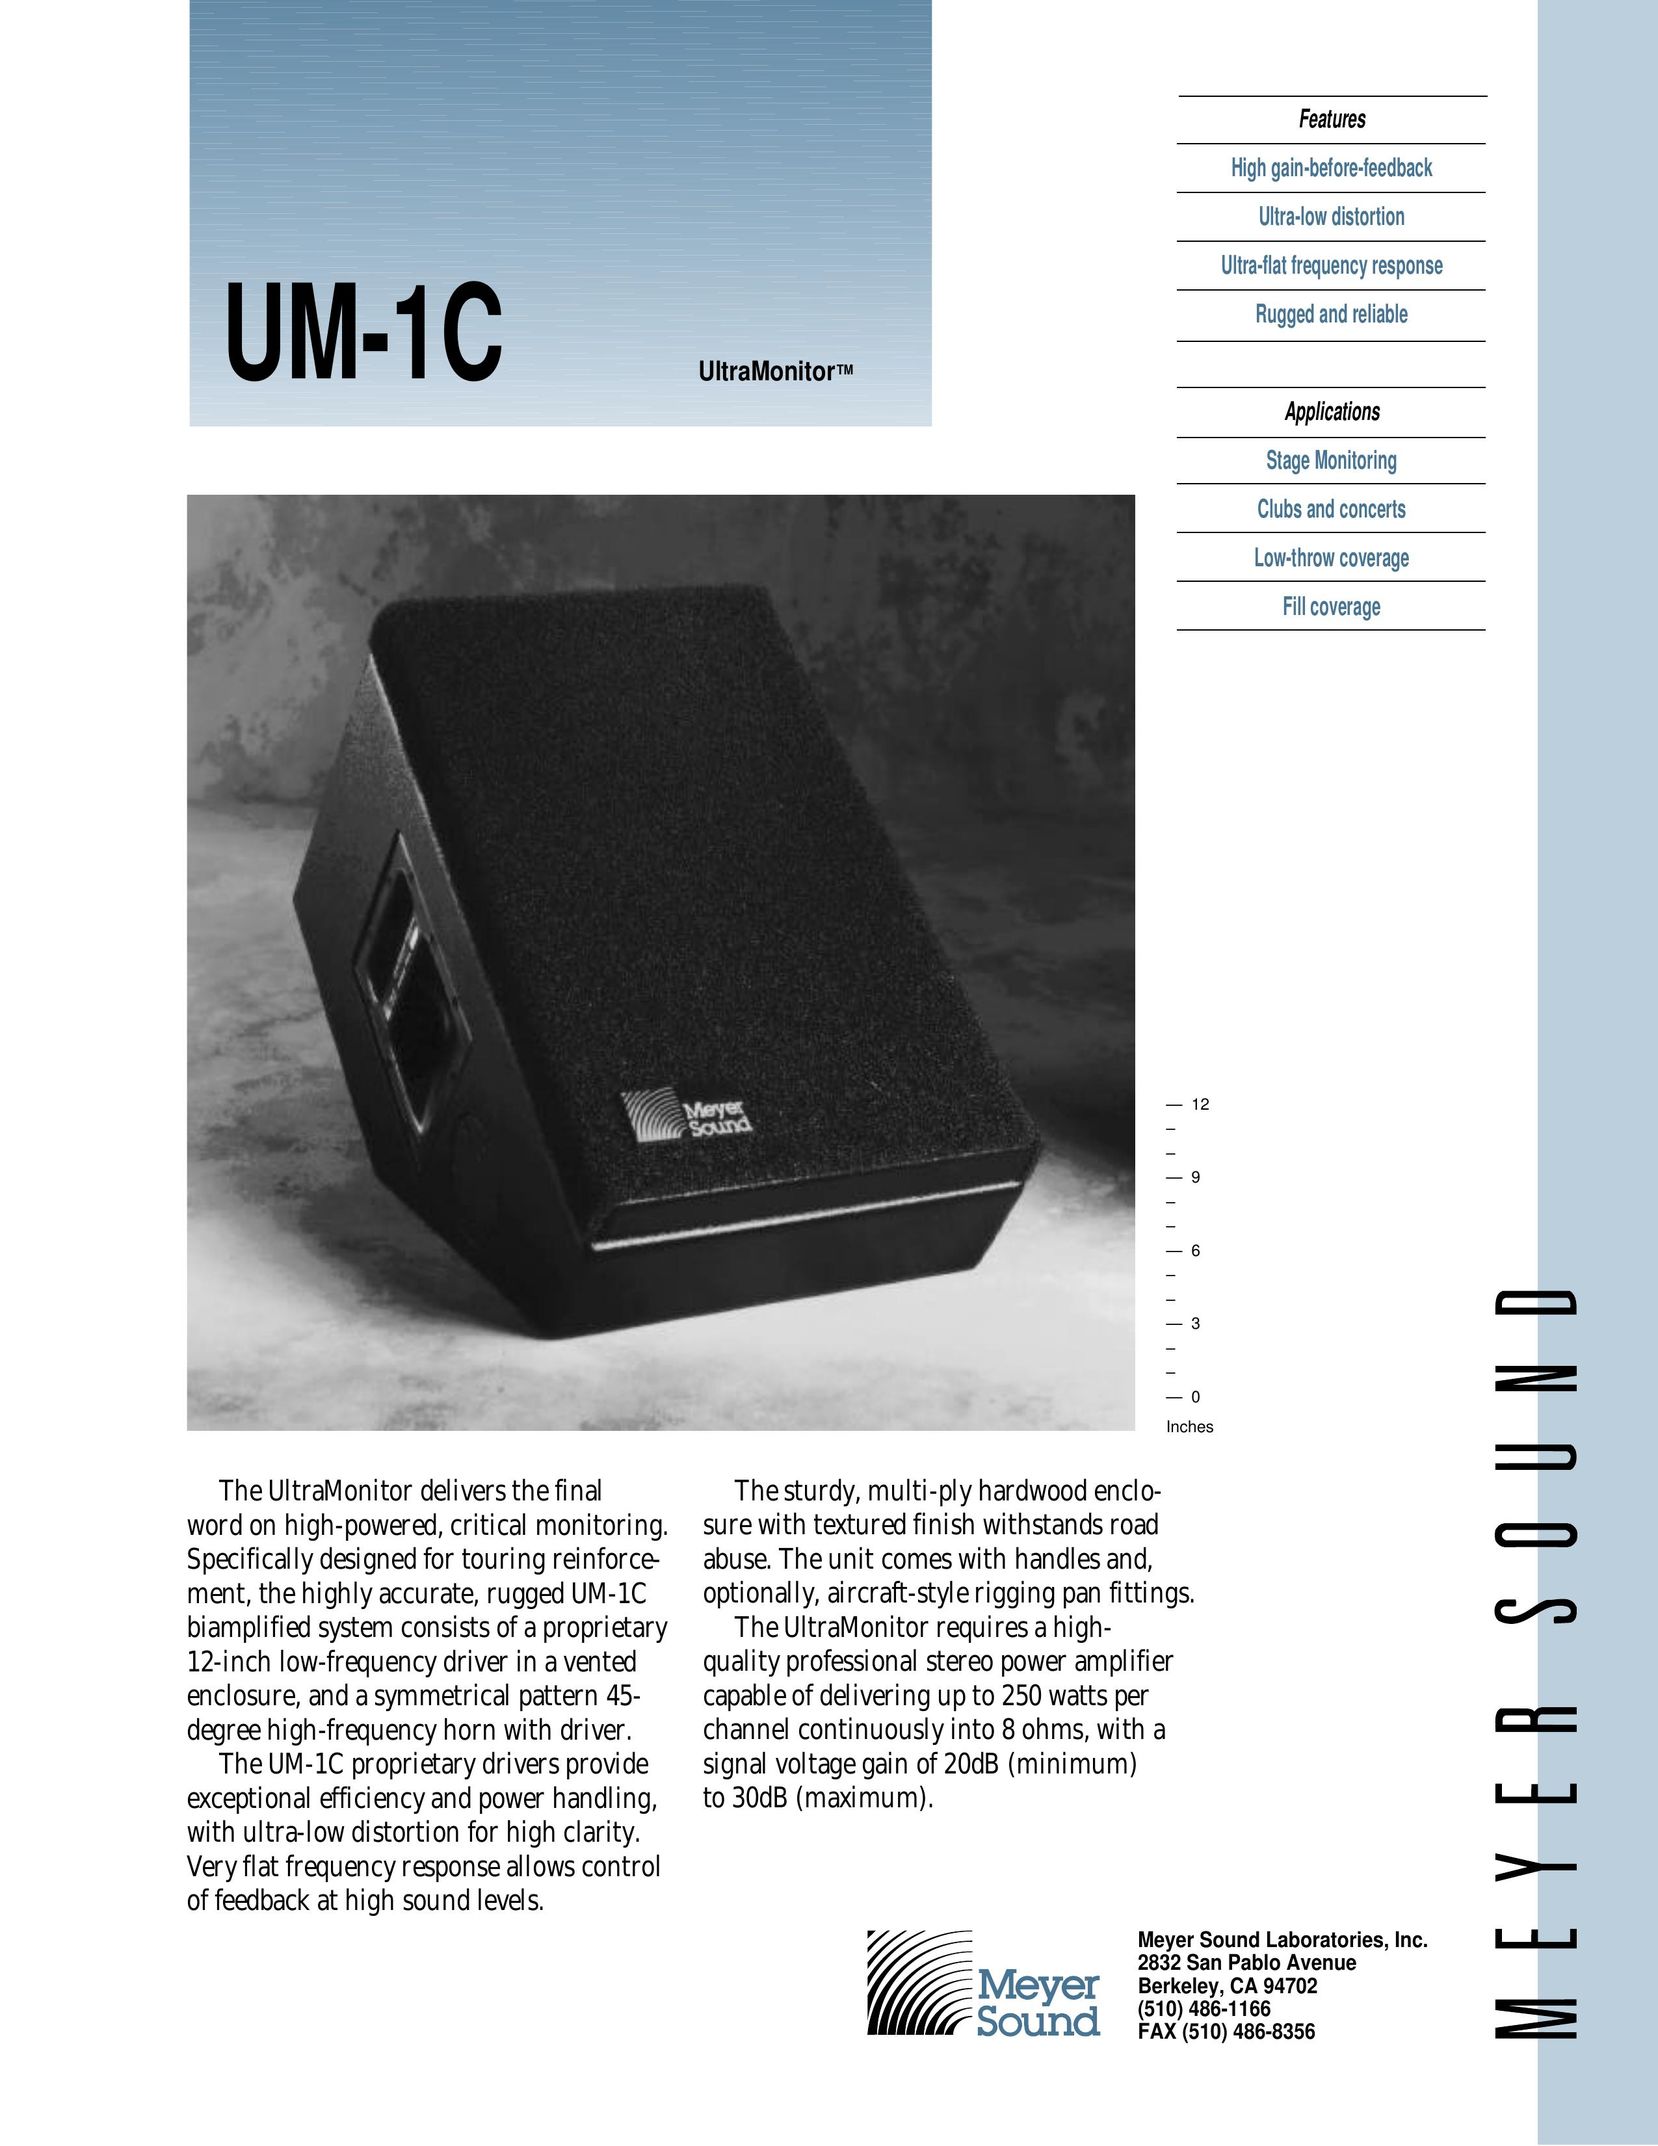 Meyer Sound UM-1C Home Theater Screen User Manual